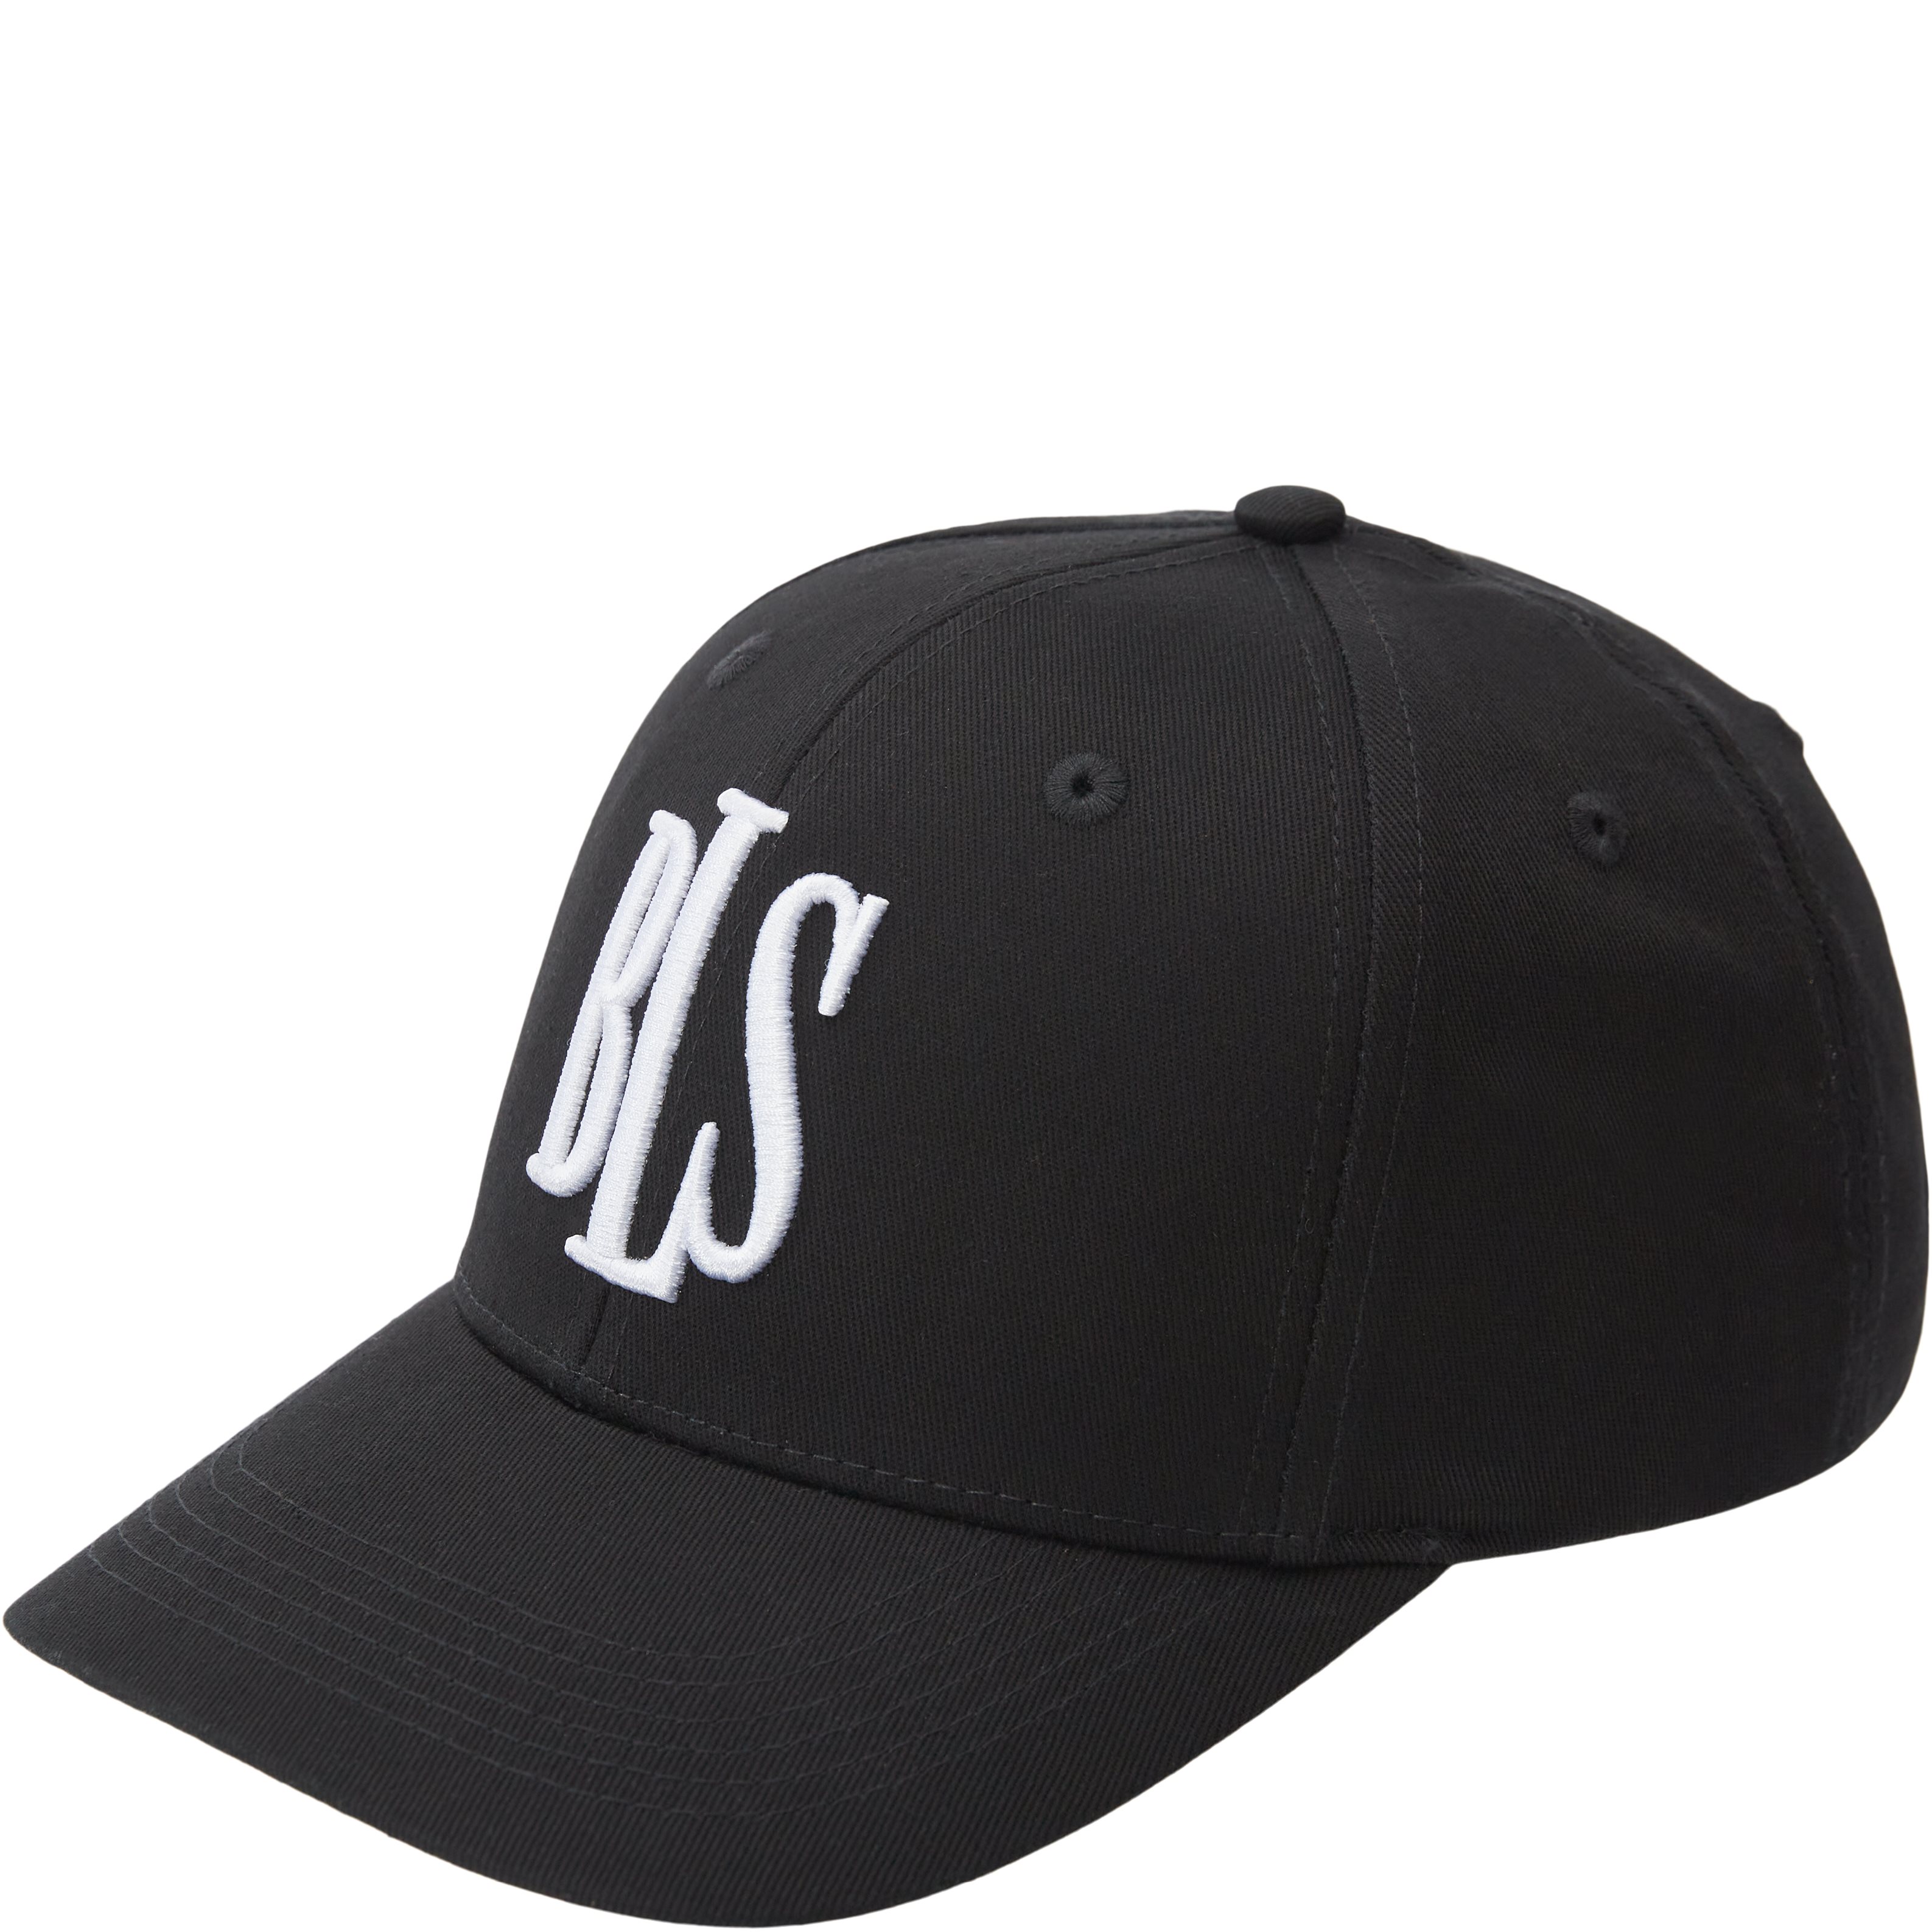 BLS Beanies CLASSIC BASEBALL CAP BLACK 99101 Black